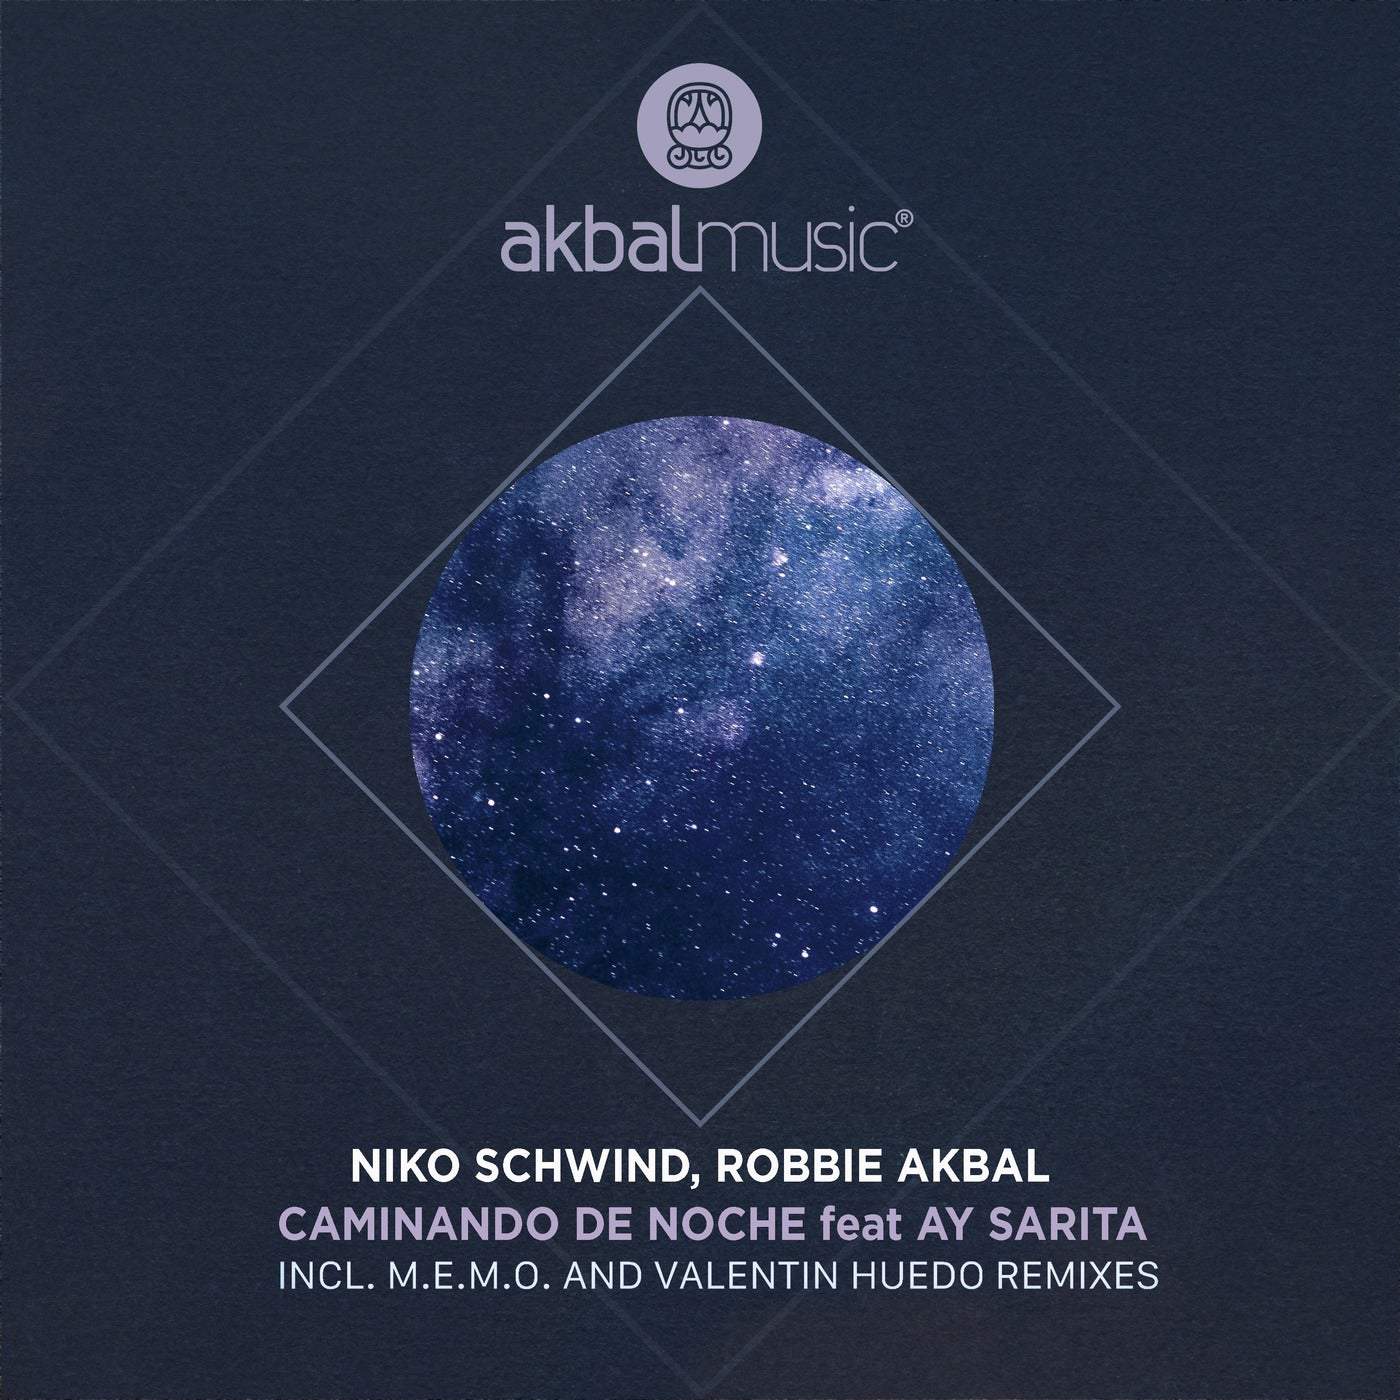 Download Niko Schwind, Robbie Akbal, Ay Sarita - Caminando de Noche Remixes, Pt. 2 on Electrobuzz